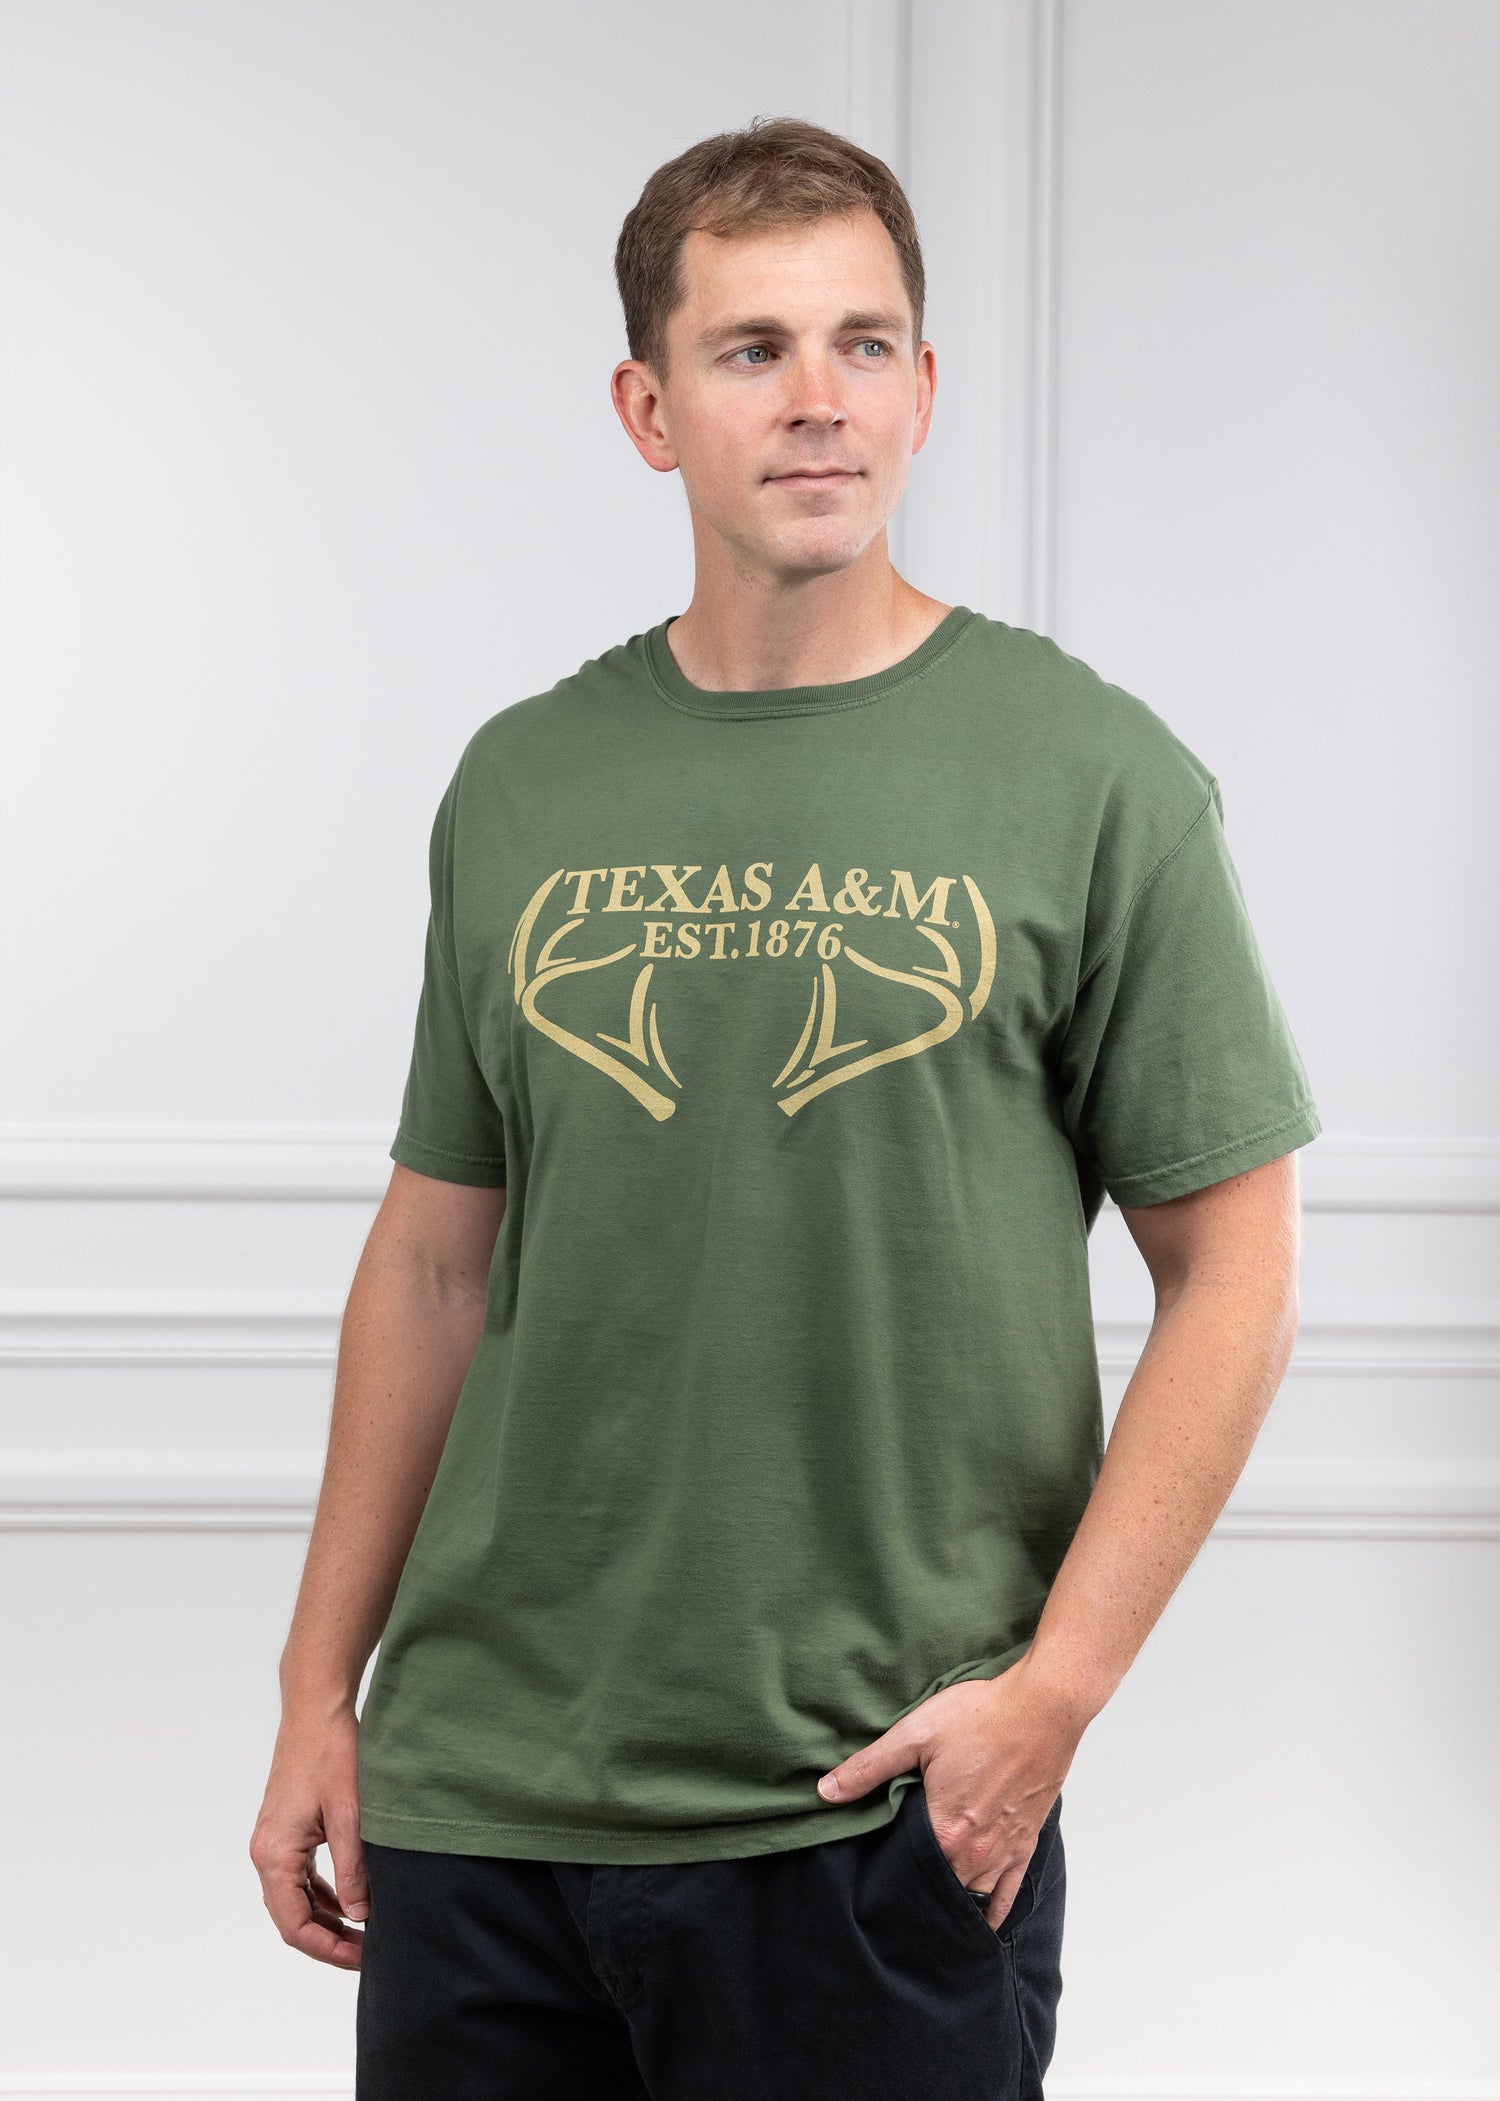 Texas A&M Deer Antlers T-Shirt